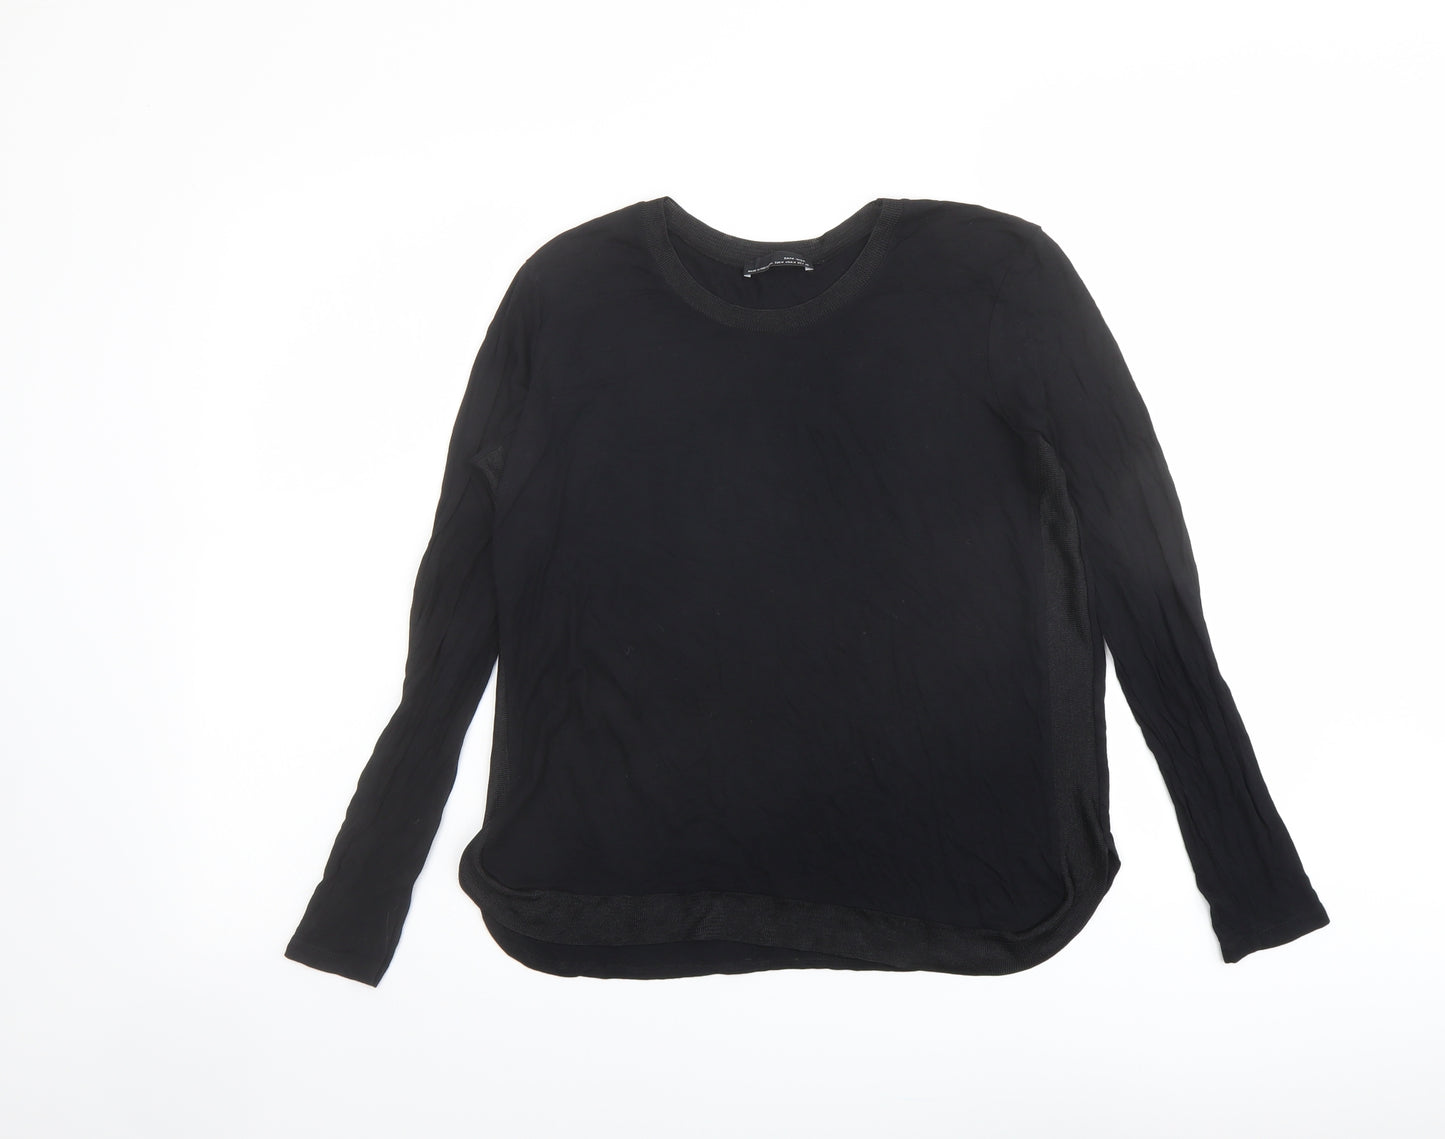 Zara Womens Black Polyester Basic Blouse Size M Round Neck - Mesh Panels